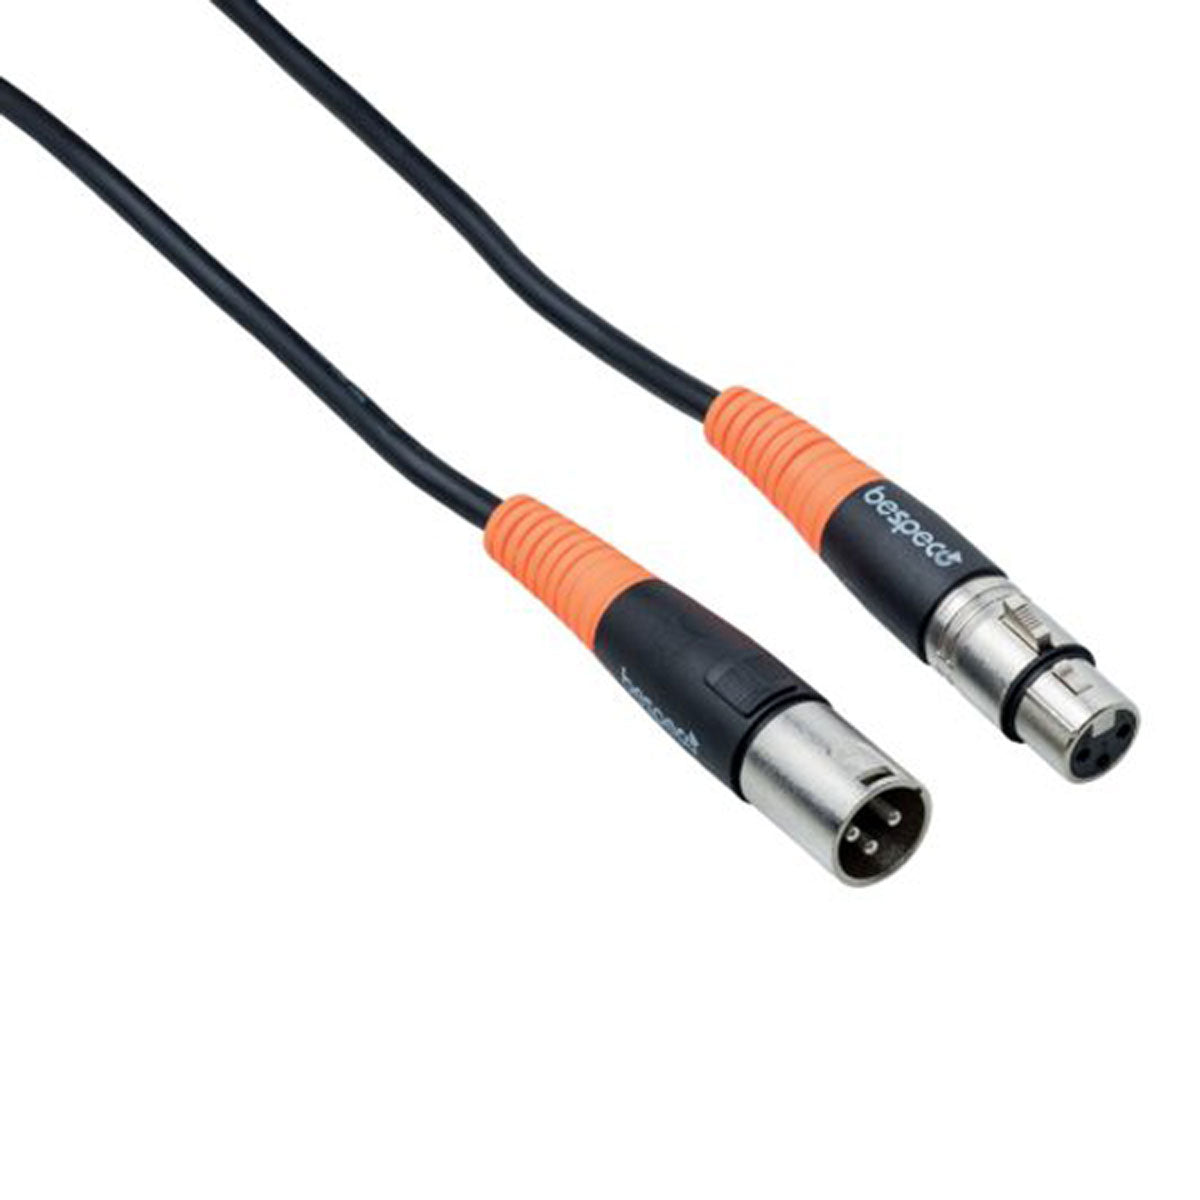 Bespeco SLFM900 XLR Male to Female XLR Cable, 30 inches, Black/Orange